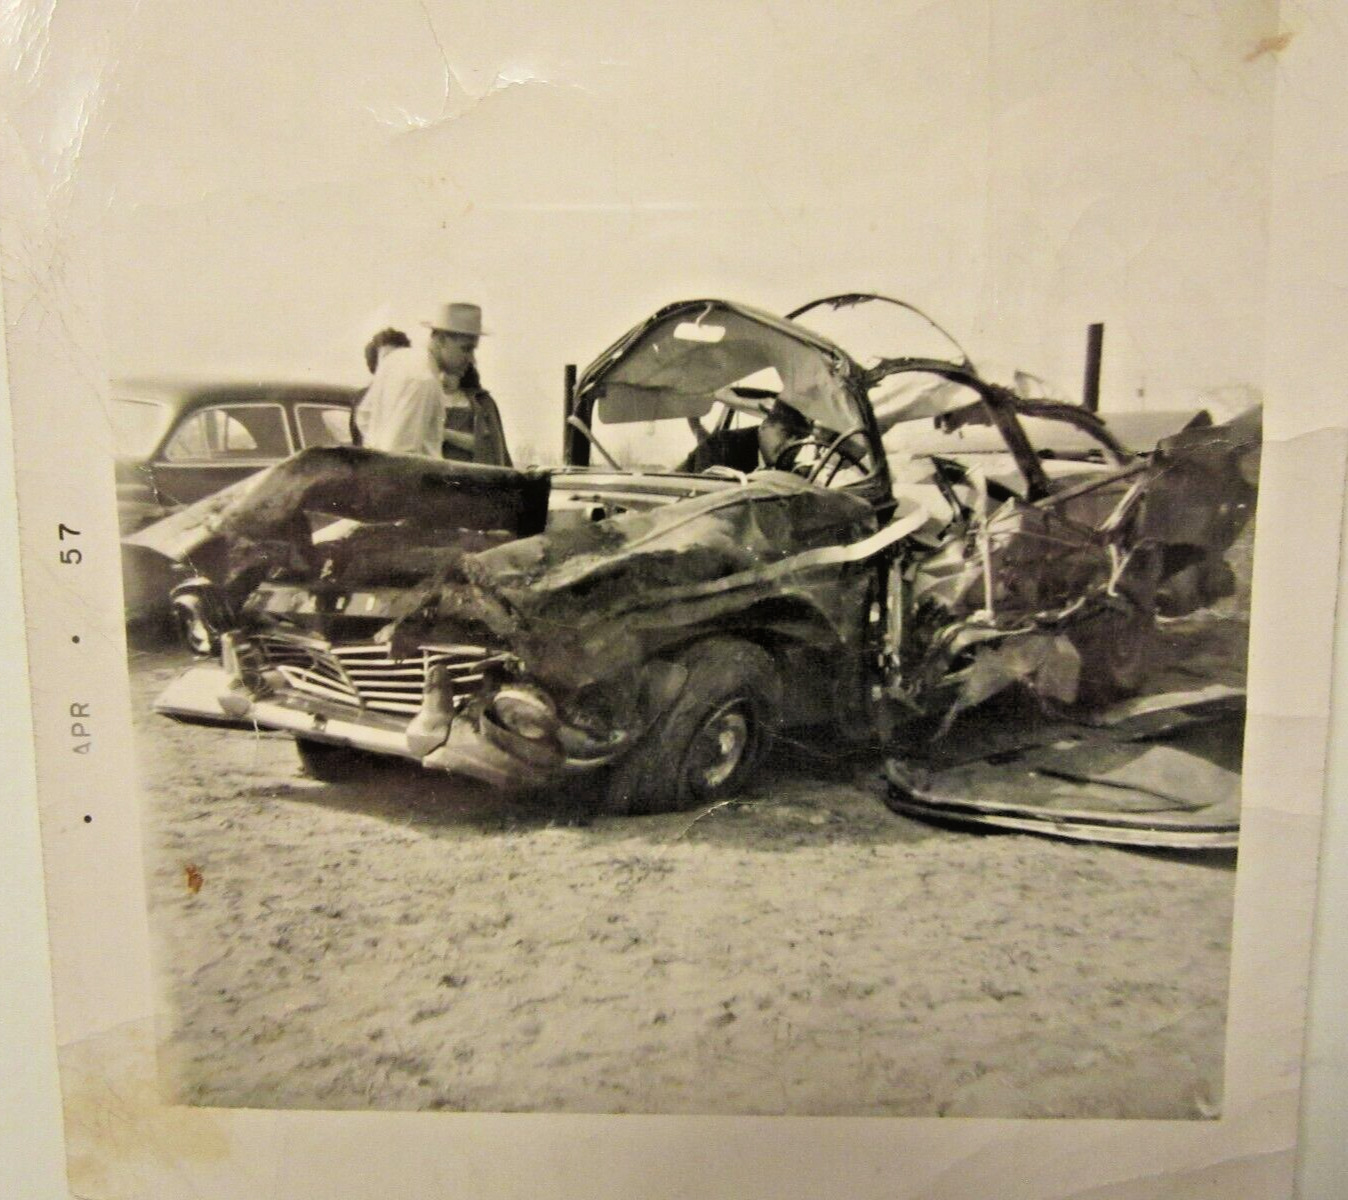 1957 FORD wreck, Apr 9, 1957. George & Carnice Johnson. B&W photo 3 1/2 x 3 1/2.